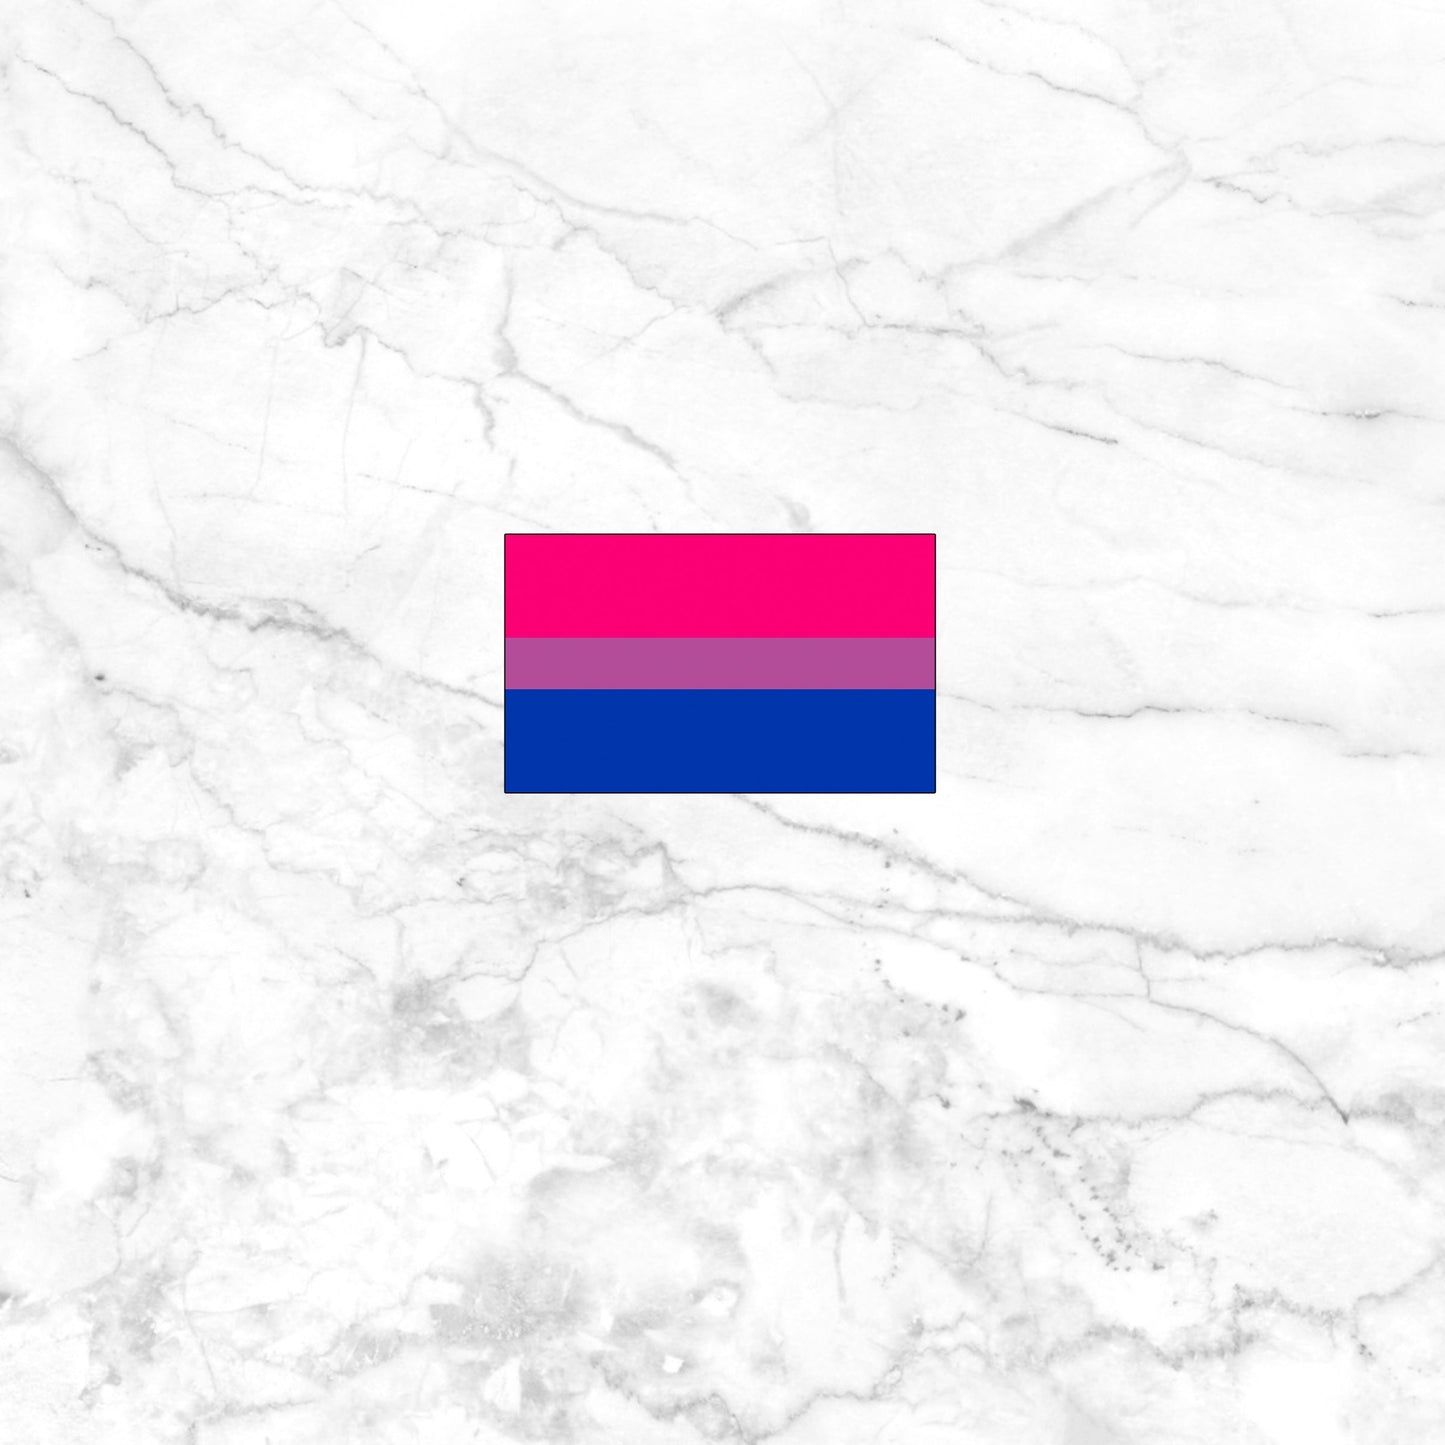 Bisexual Pride Flag Sticker